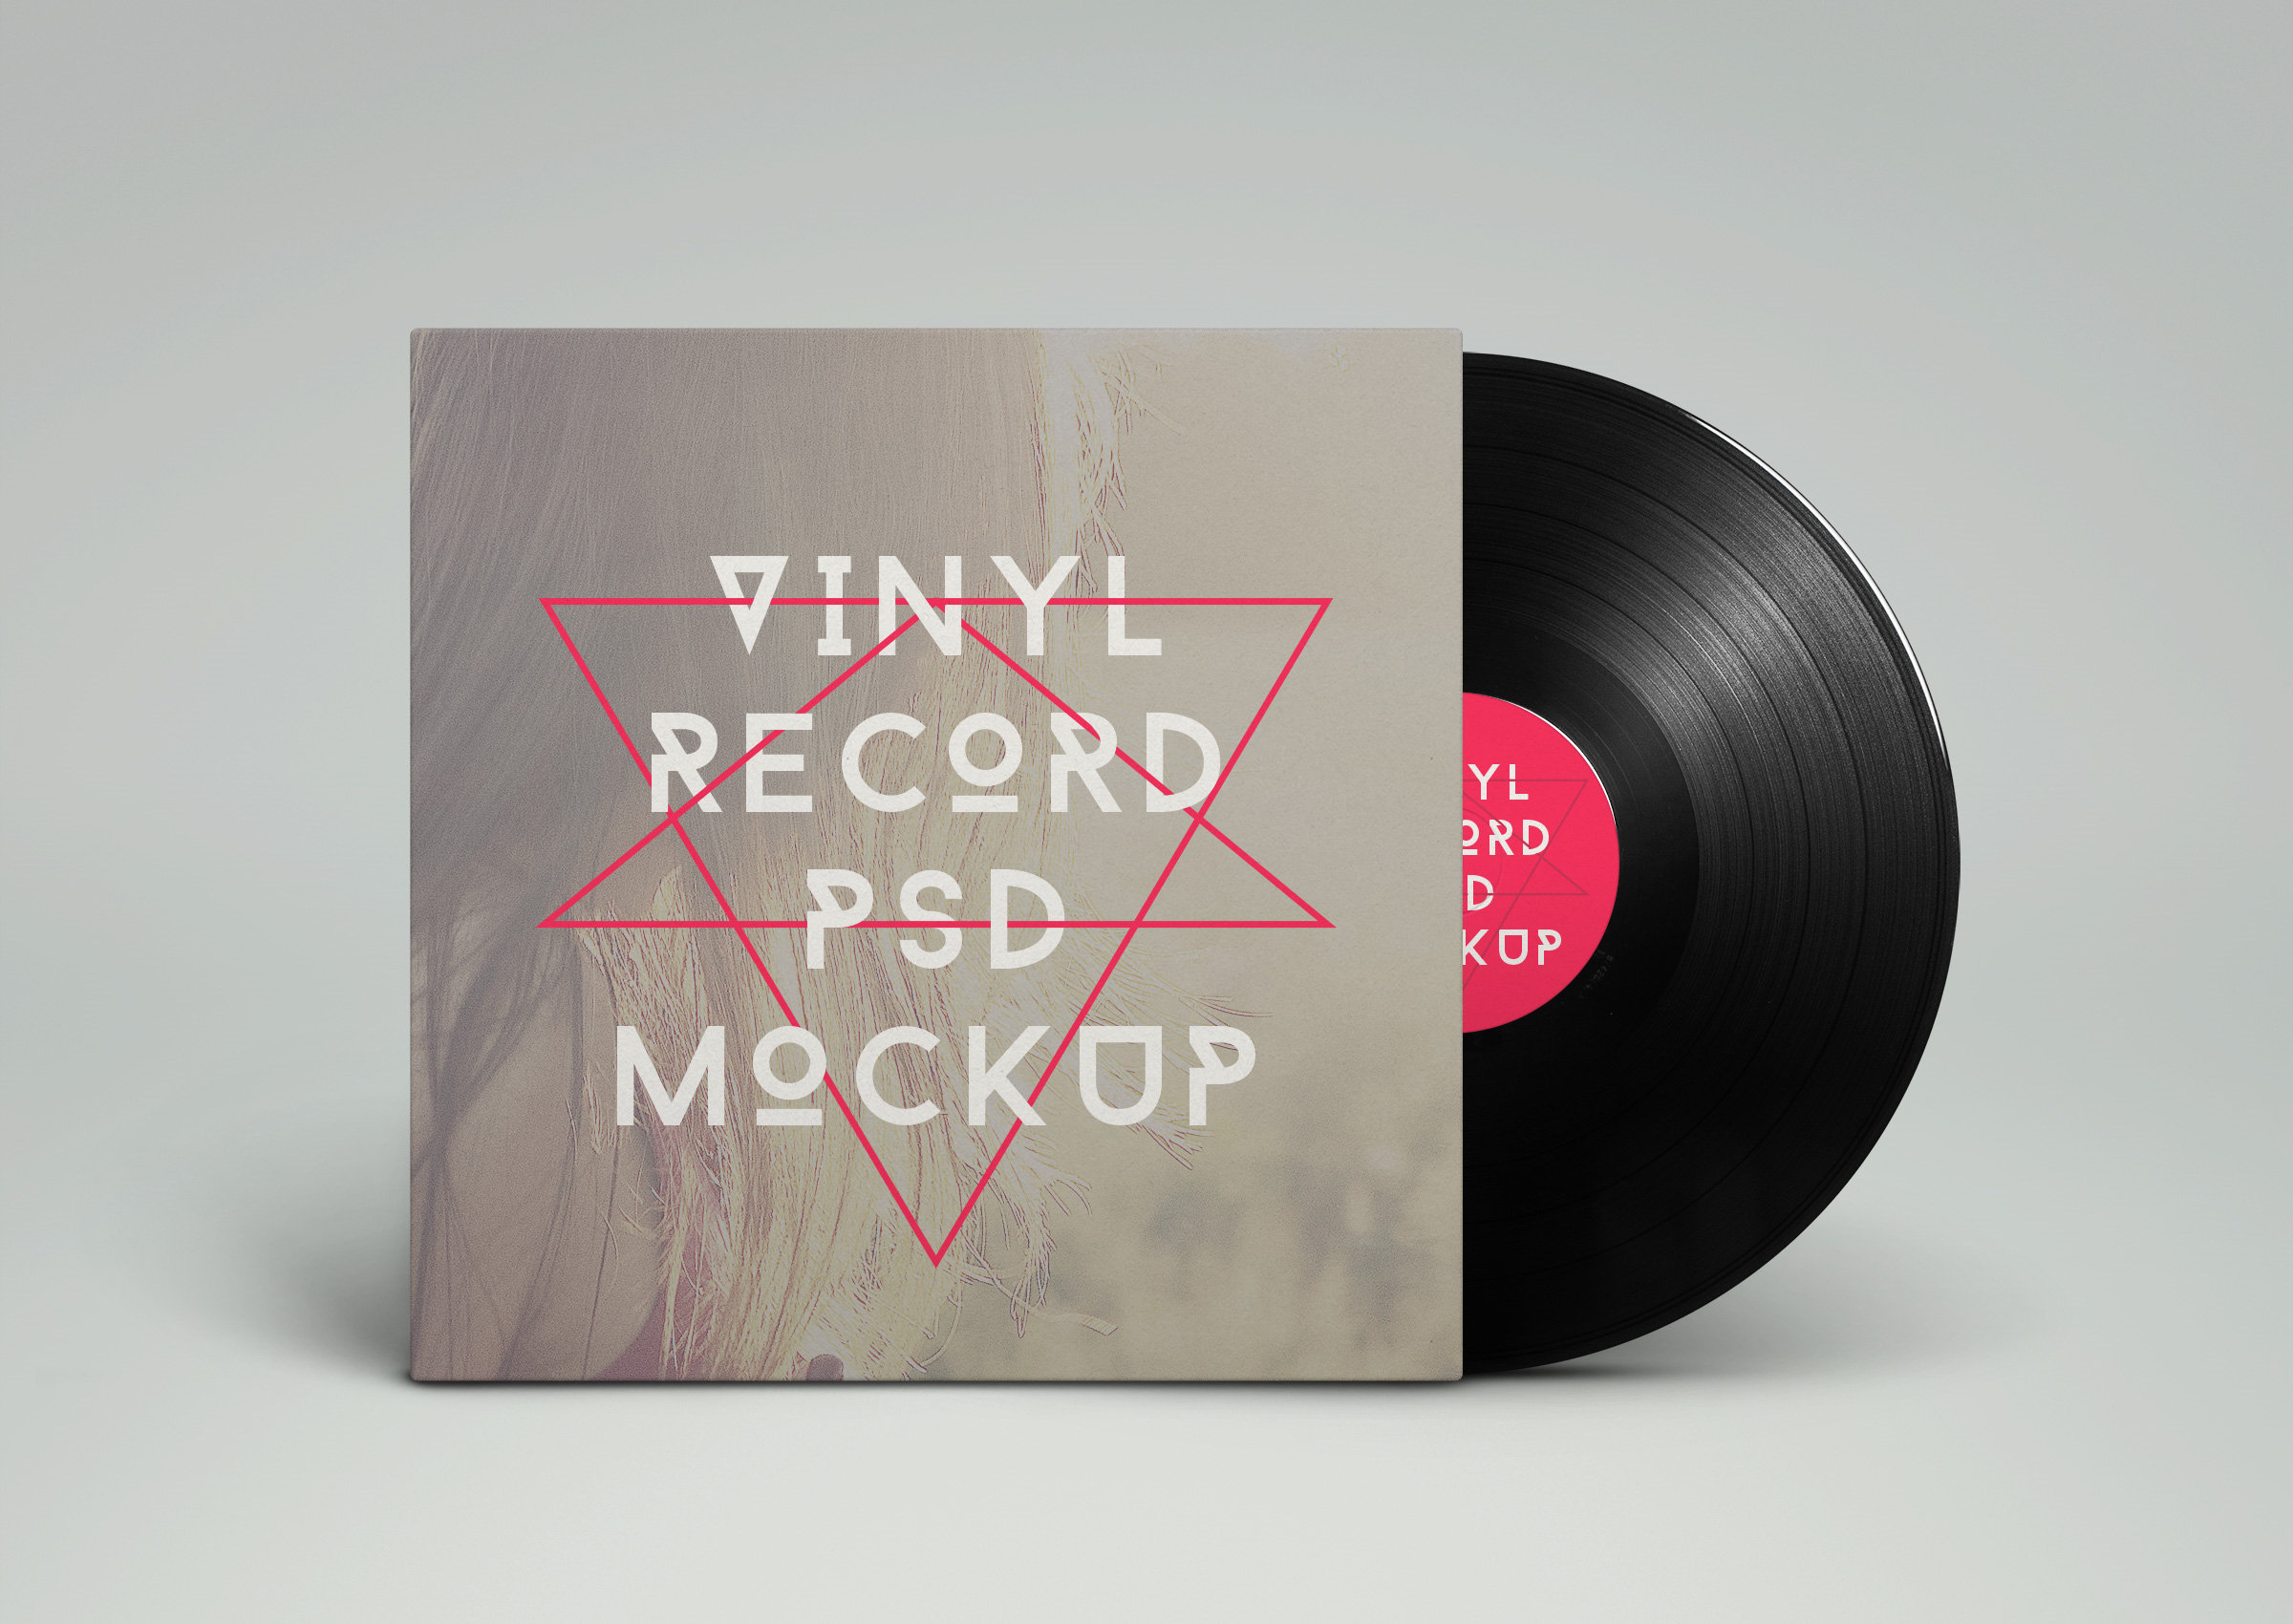 Vinyl Record PSD MockUp | GraphicBurger